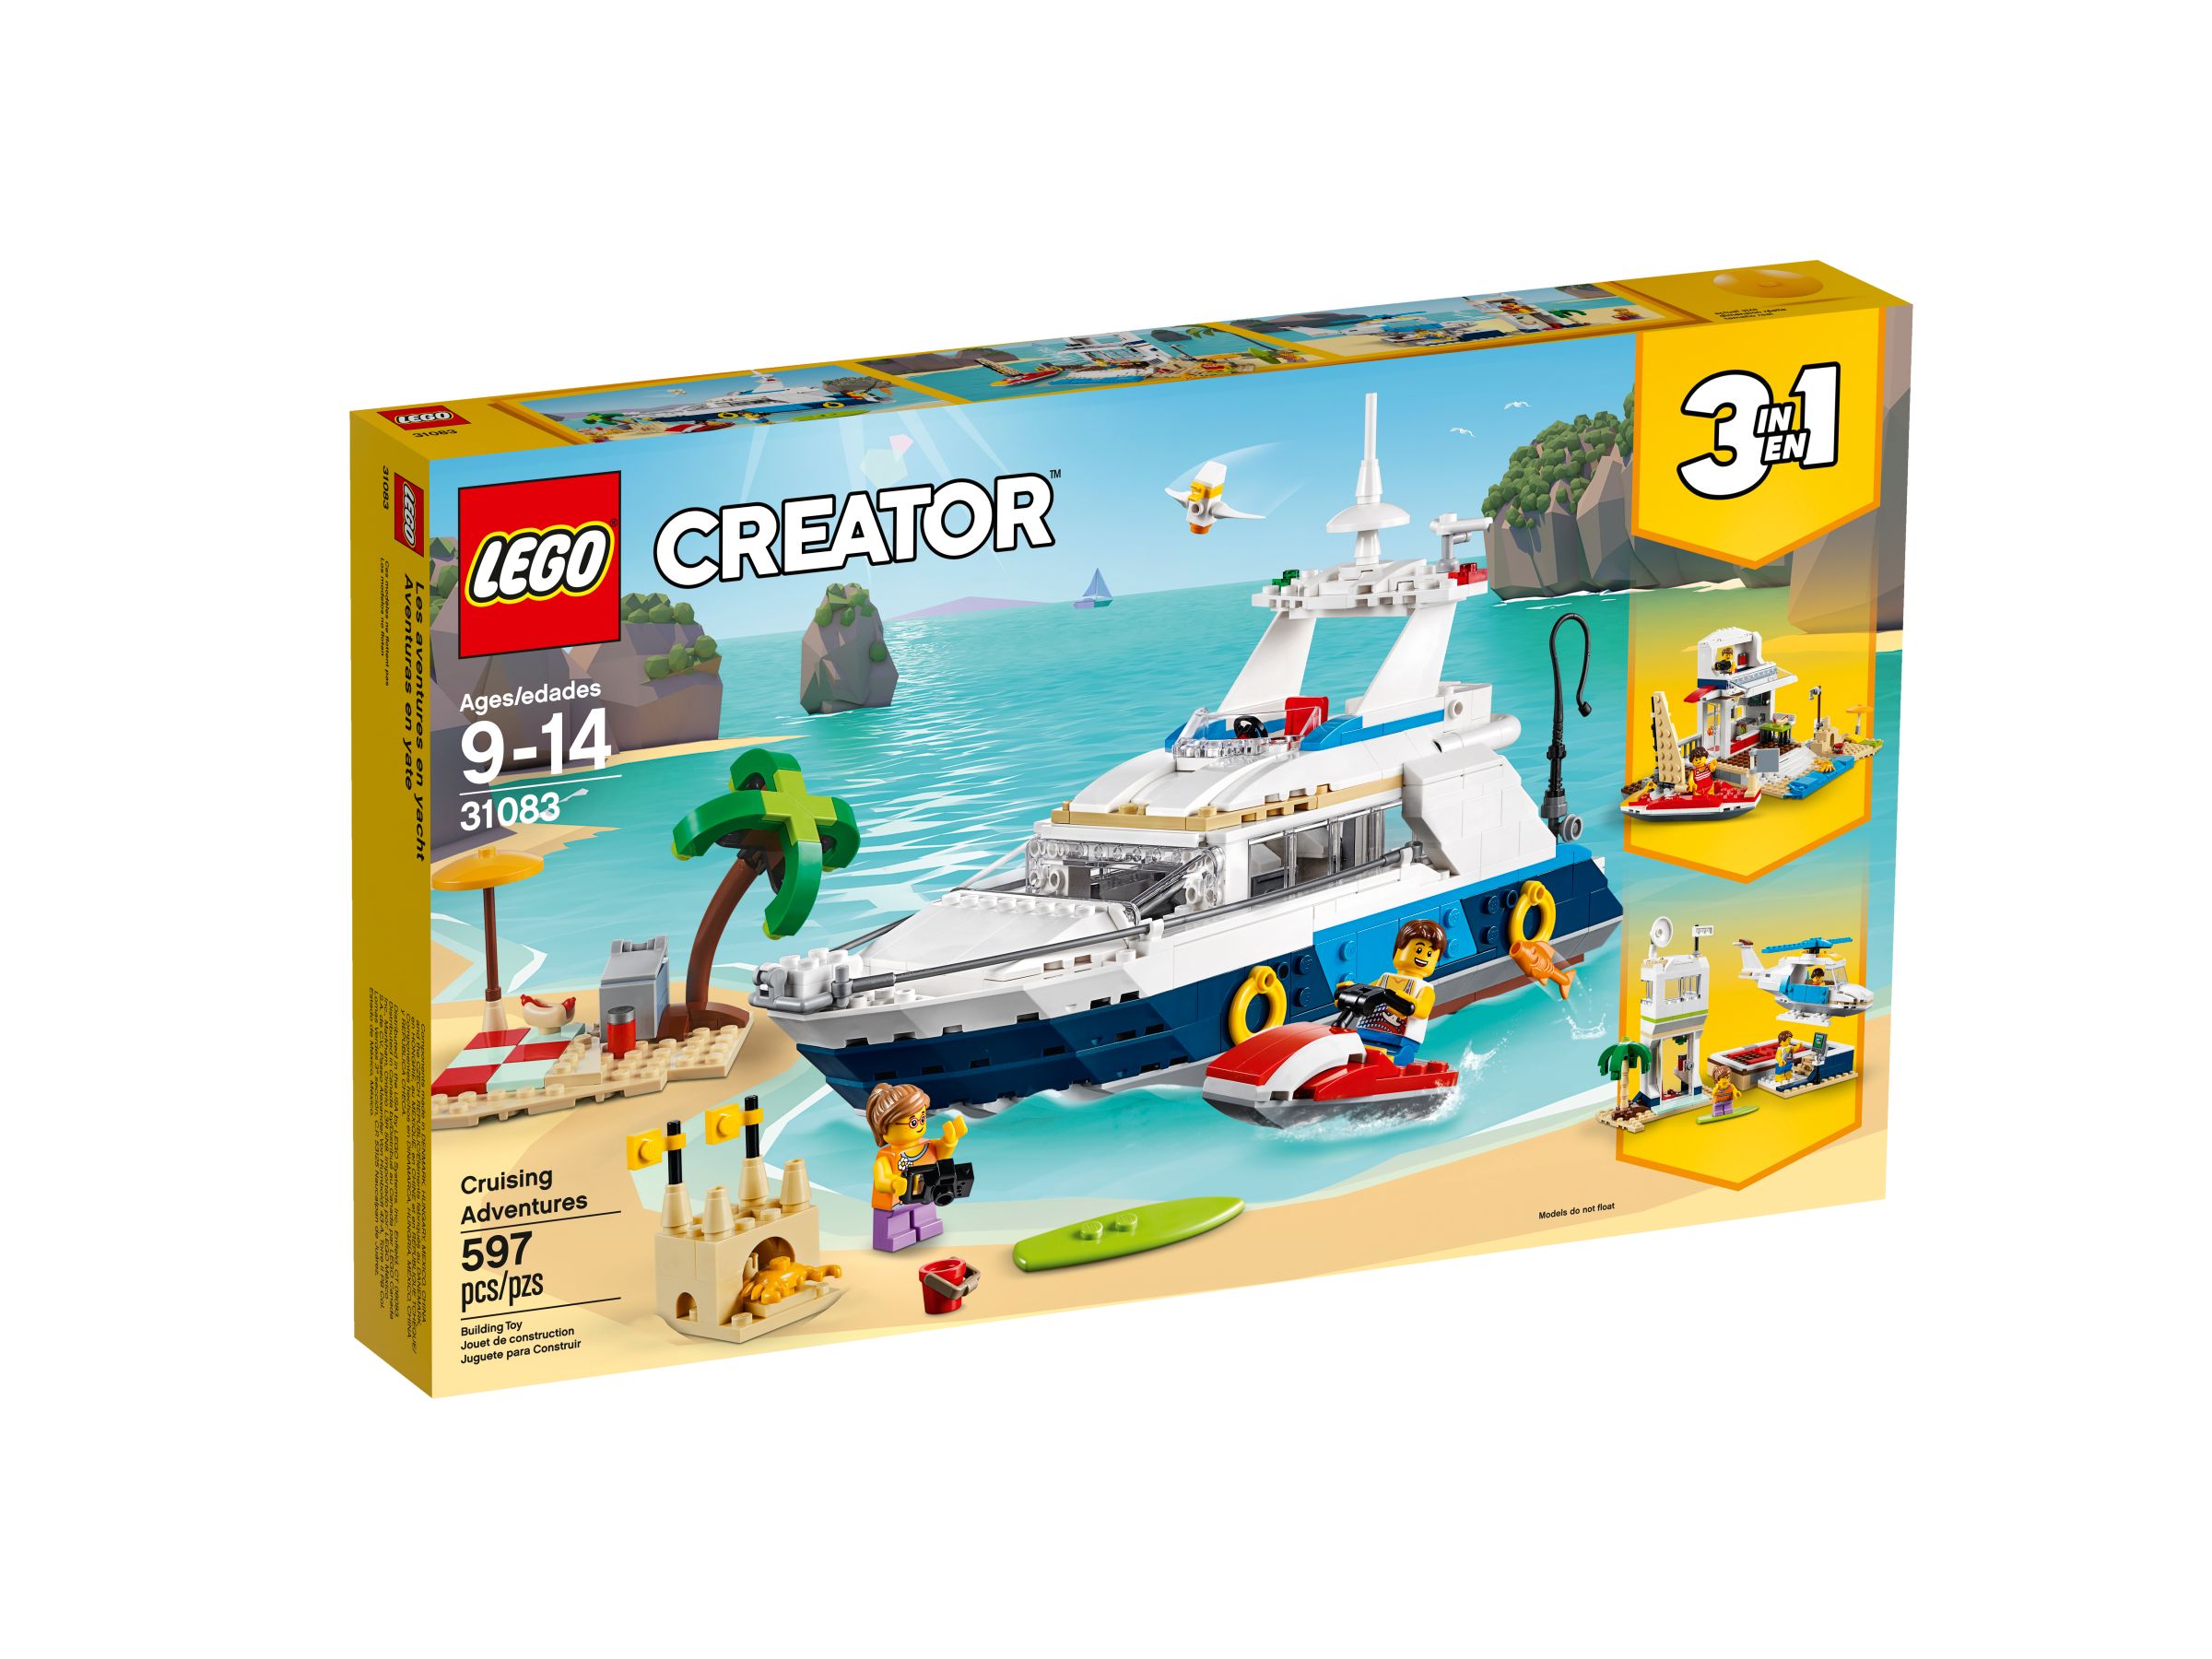 LEGO Creator 31083 Yacht LEGO_31083_alt1.jpg